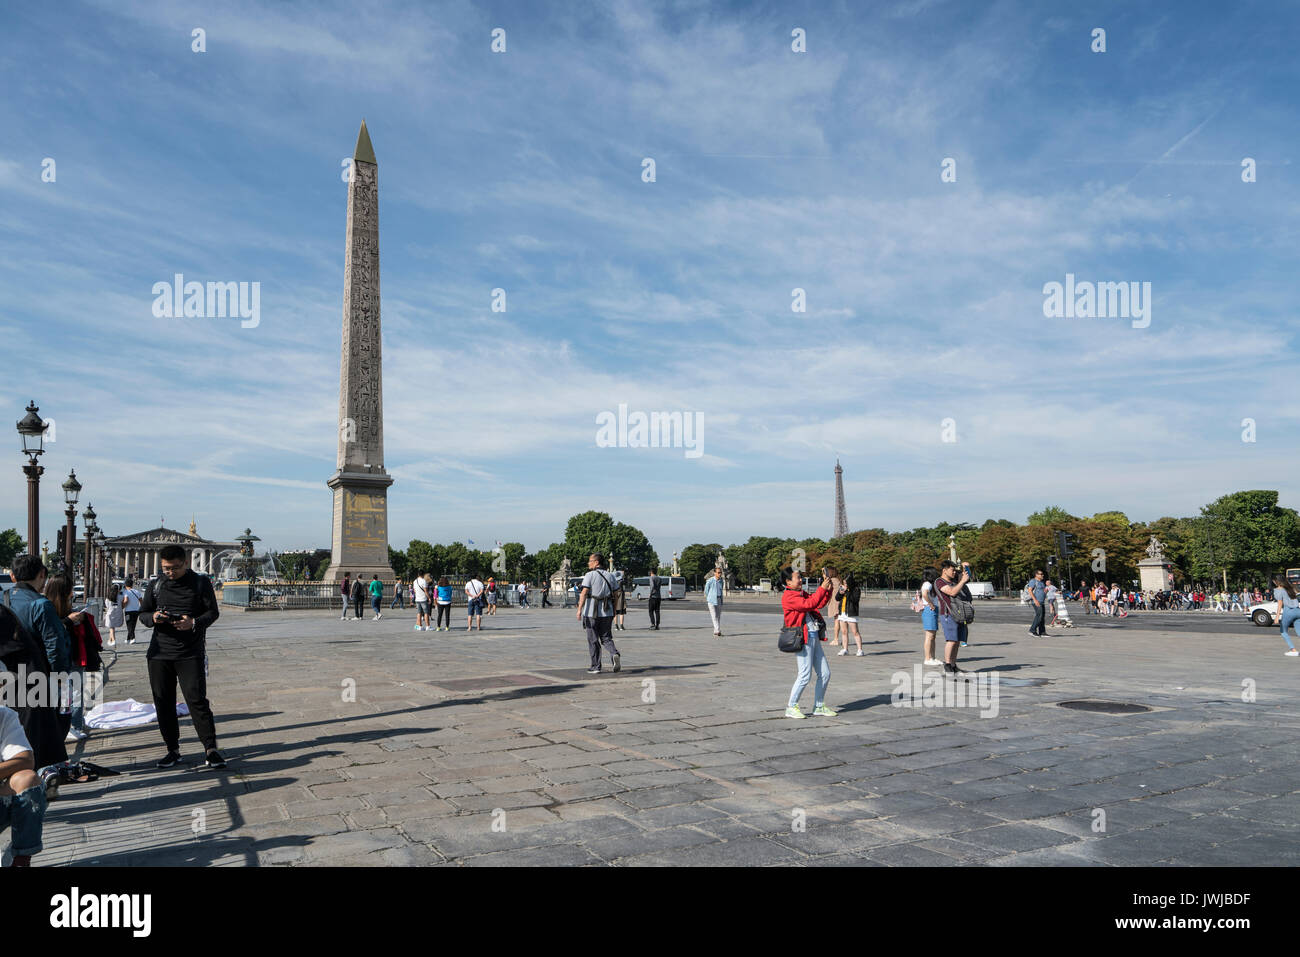 A view of the Luxor obelisk  in Place de la Concorde in Paris Stock Photo